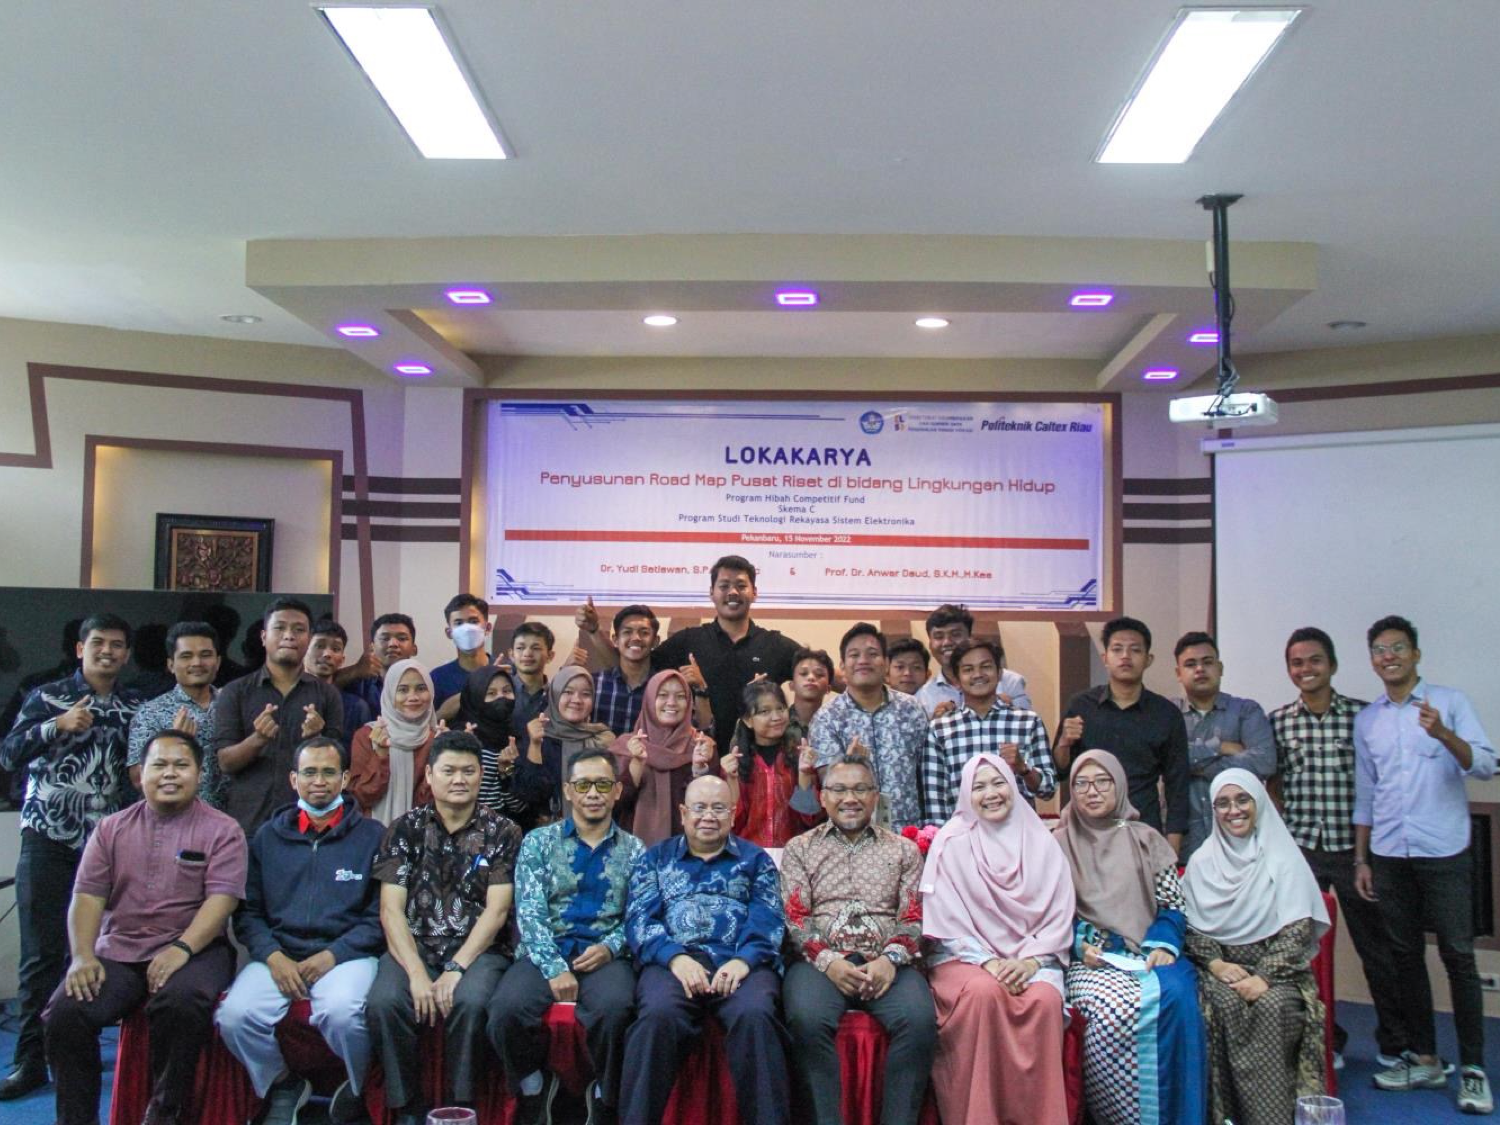 PPLH LPPM IPB University dan Politeknik Caltex Riau (PCR) Inisiasi Kerjasama dalam Pengembangan Monitoring Lingkungan 4.0